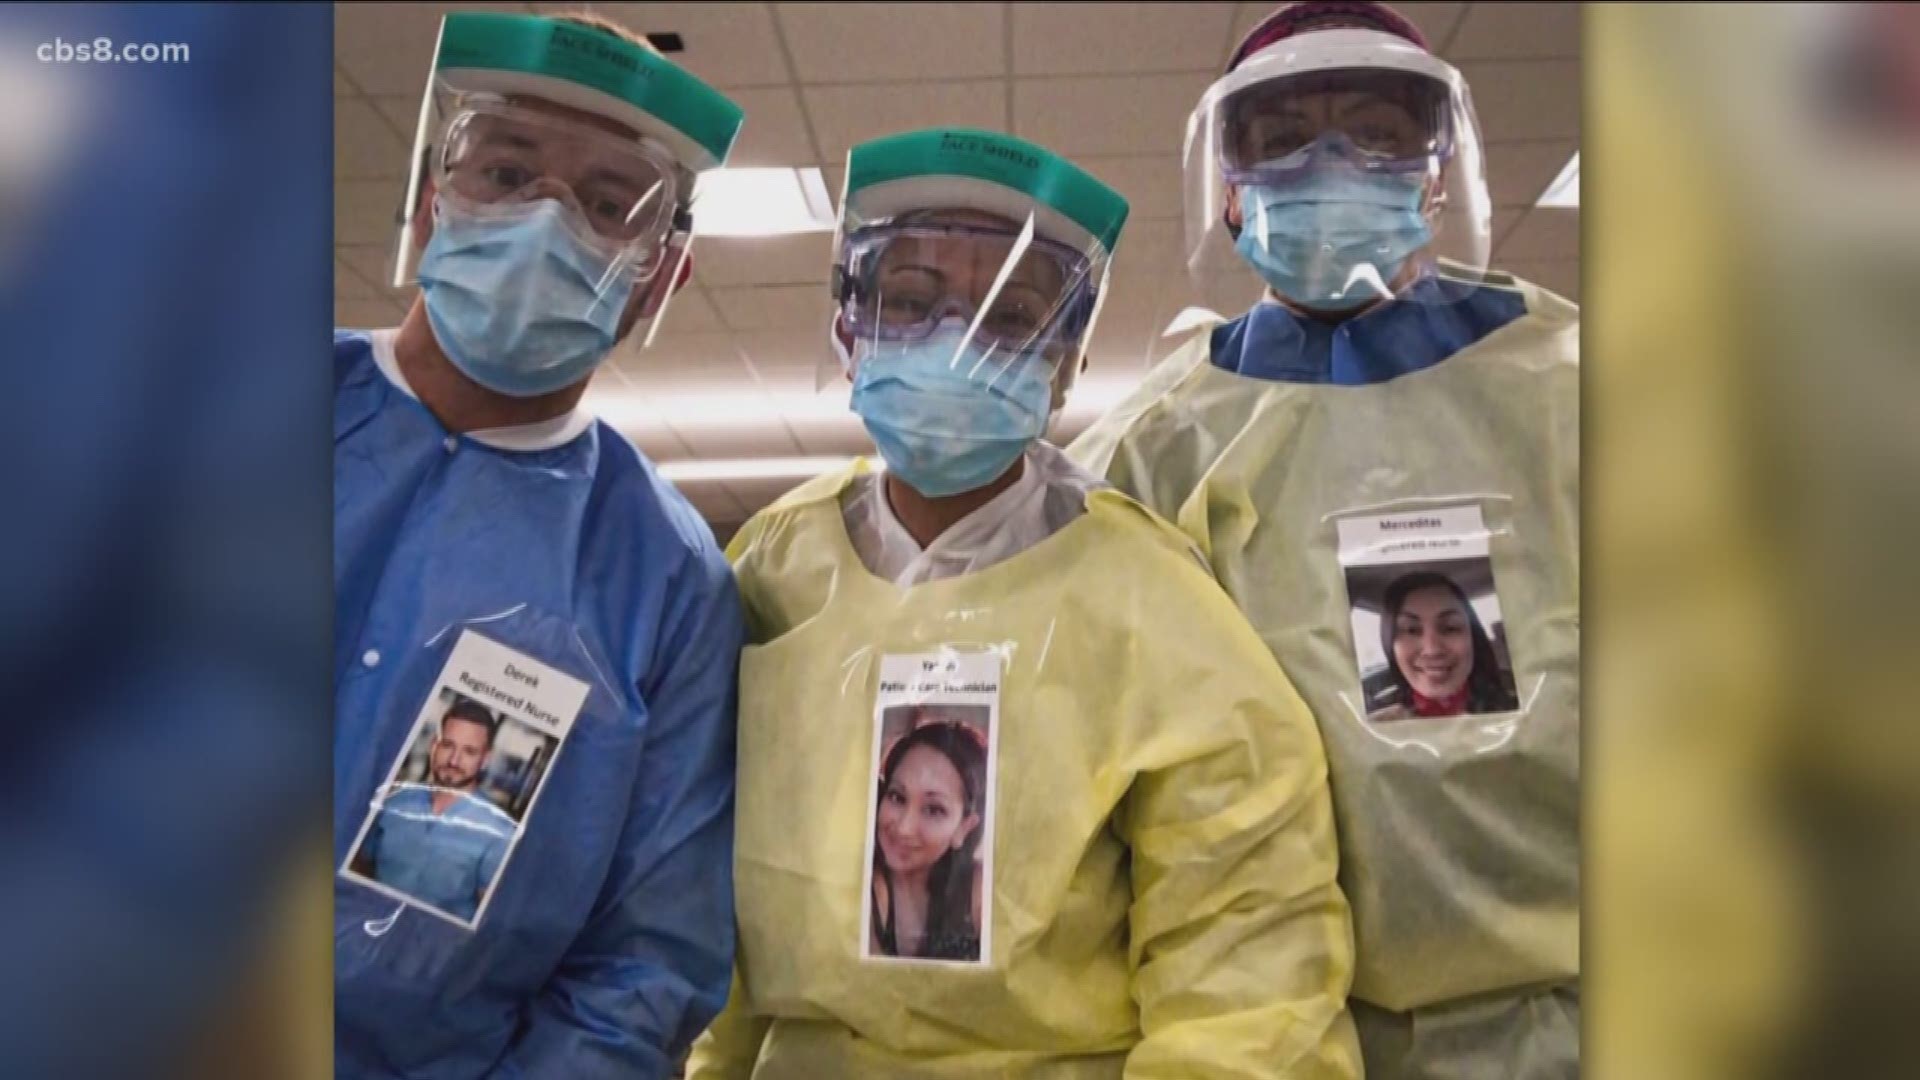 San Diego healthcare worker sparks 'friendly faces' idea.